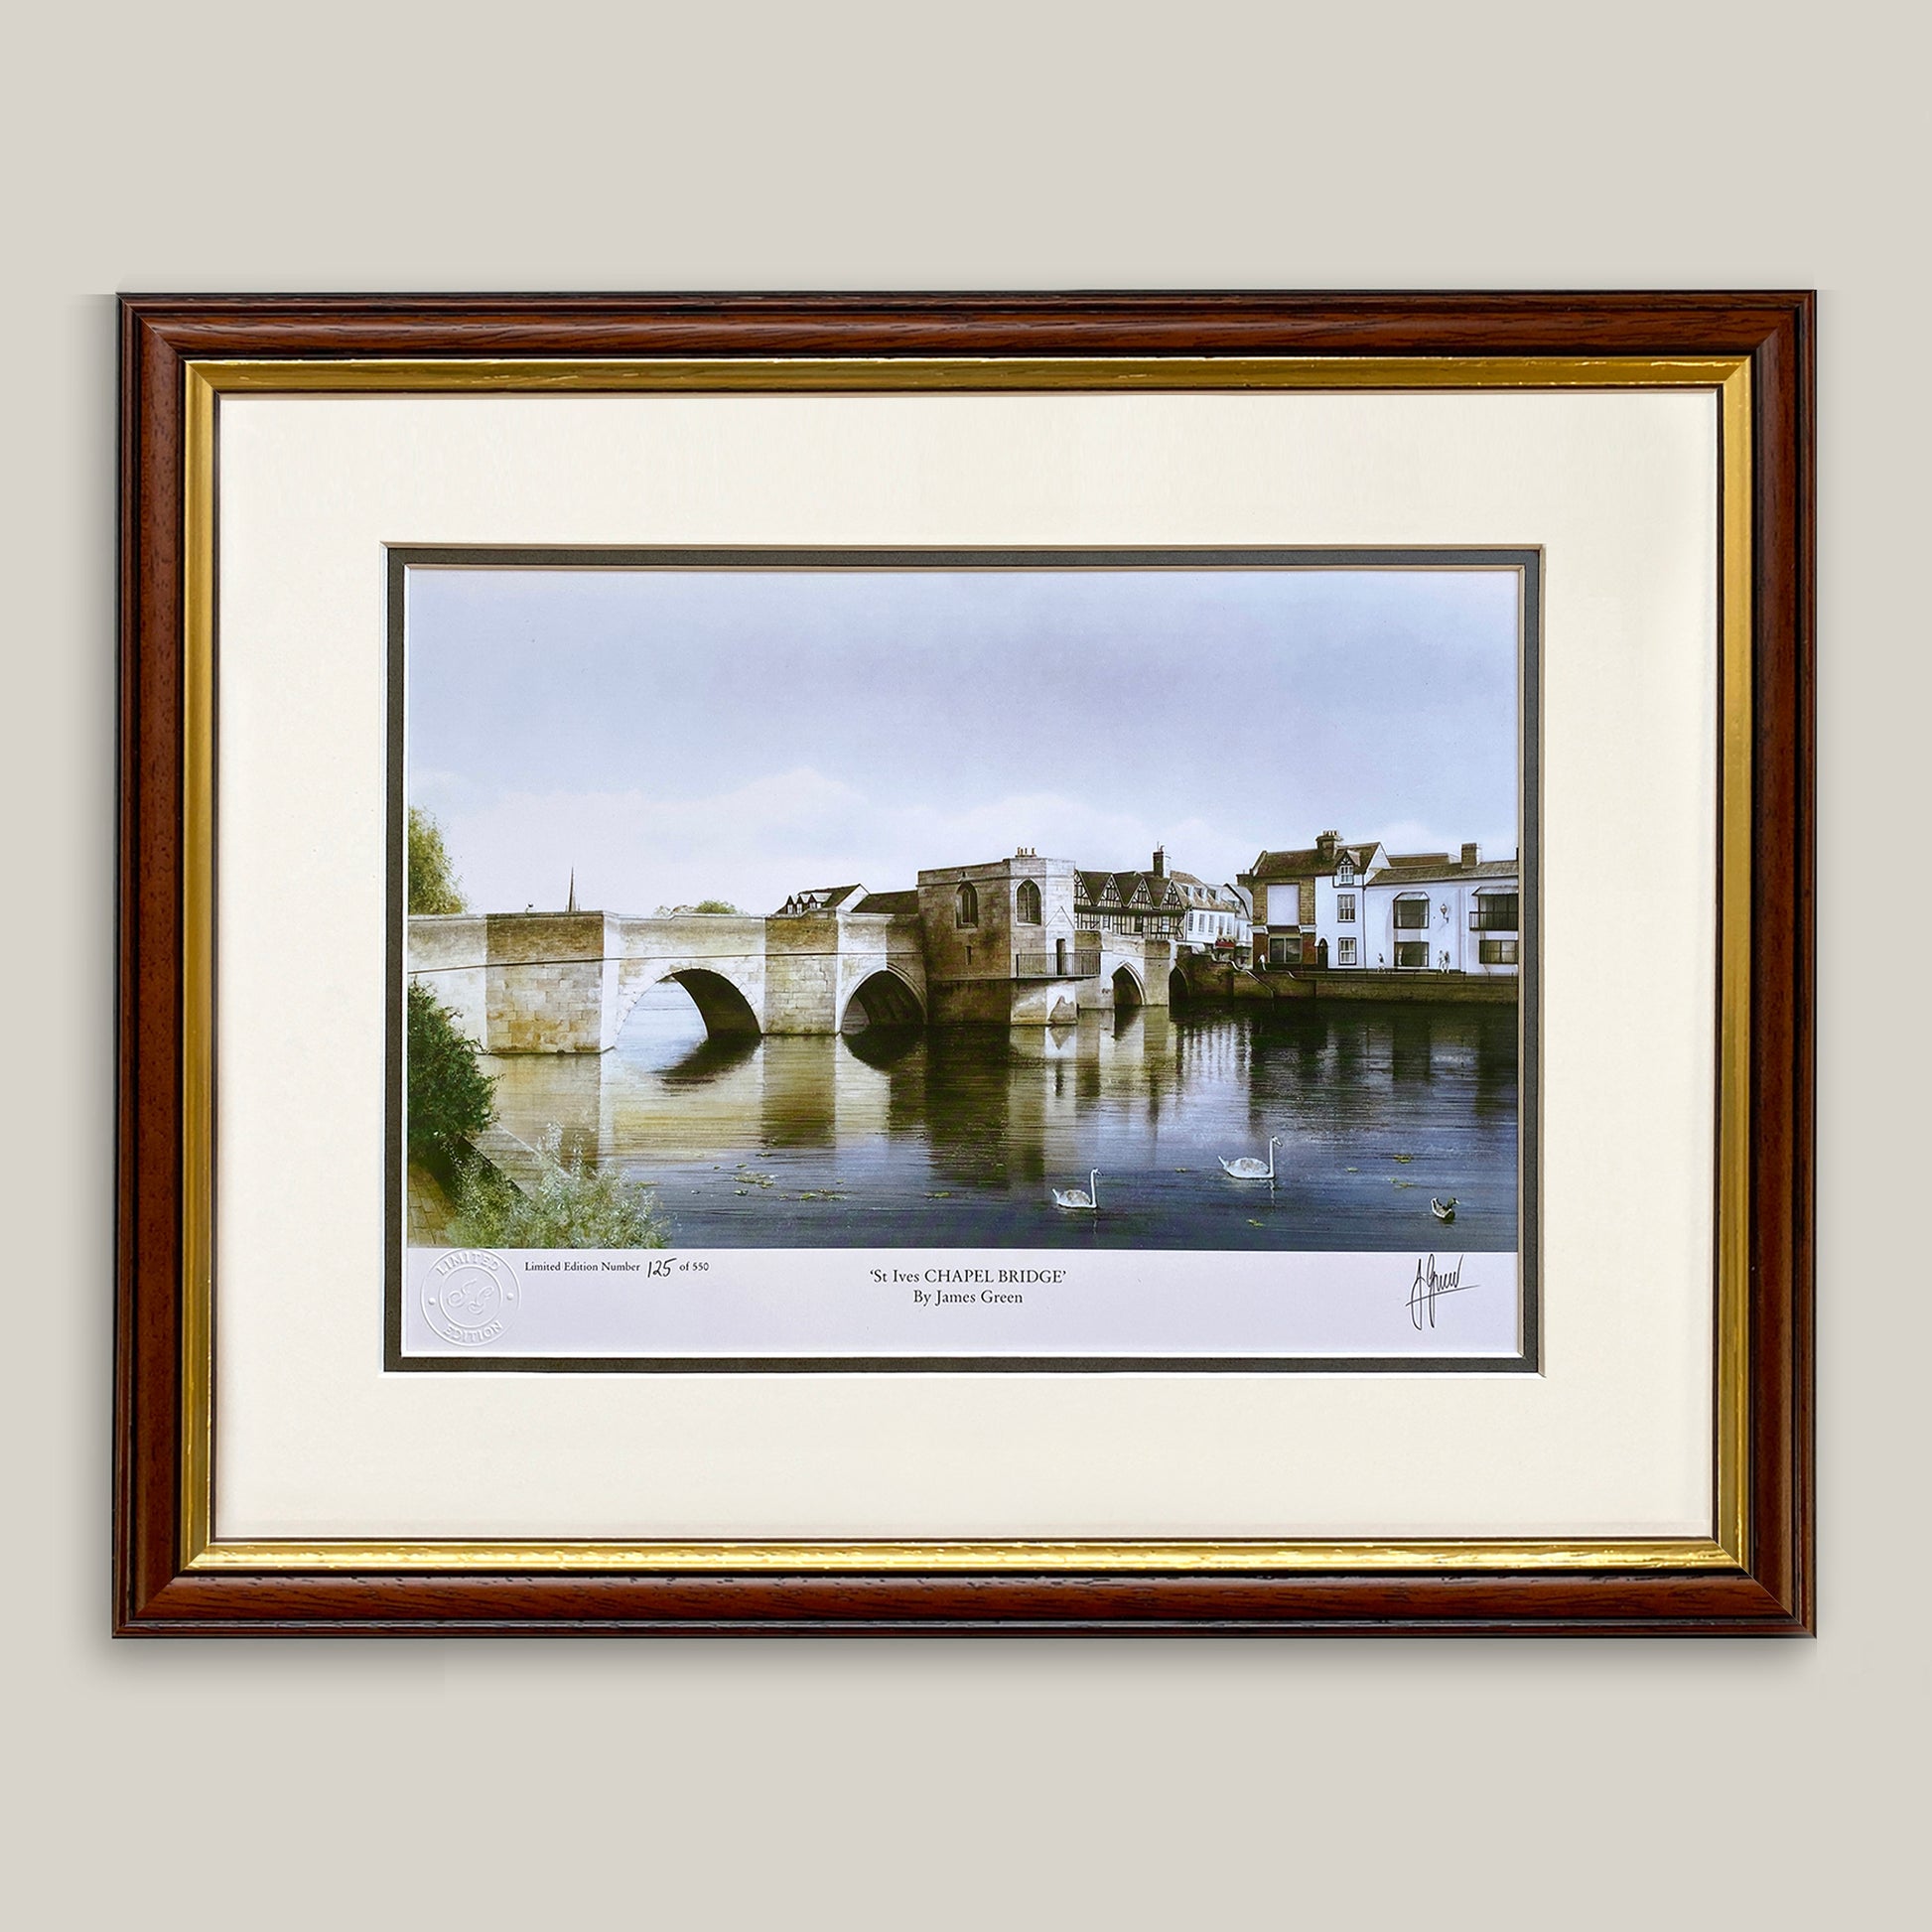 Framed print of St Ives Chapel Bridge